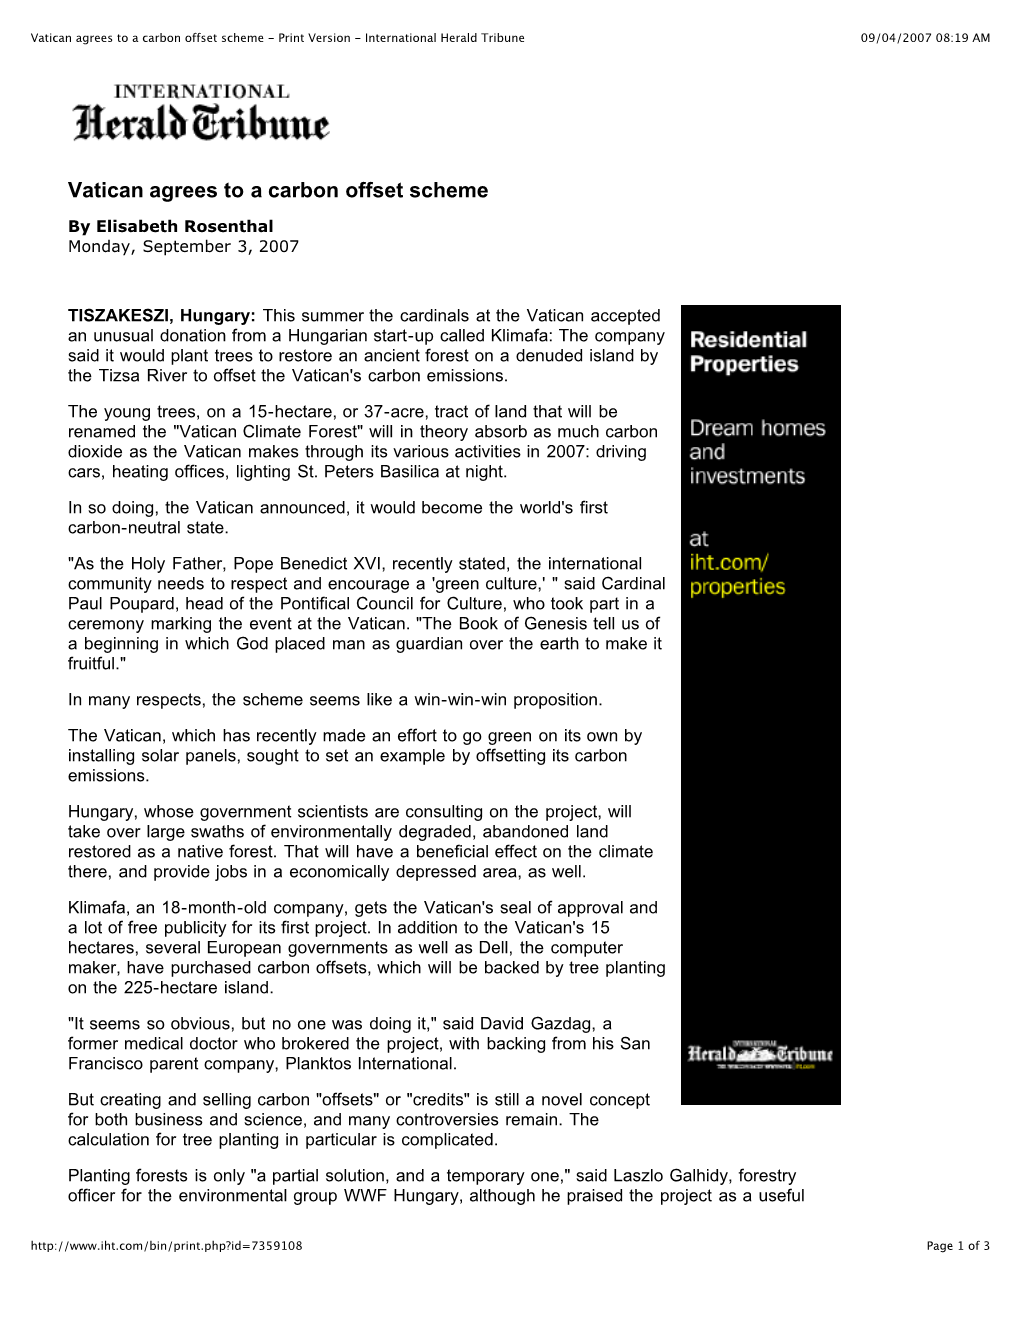 Vatican Agrees to a Carbon Offset Scheme - Print Version - International Herald Tribune 09/04/2007 08:19 AM